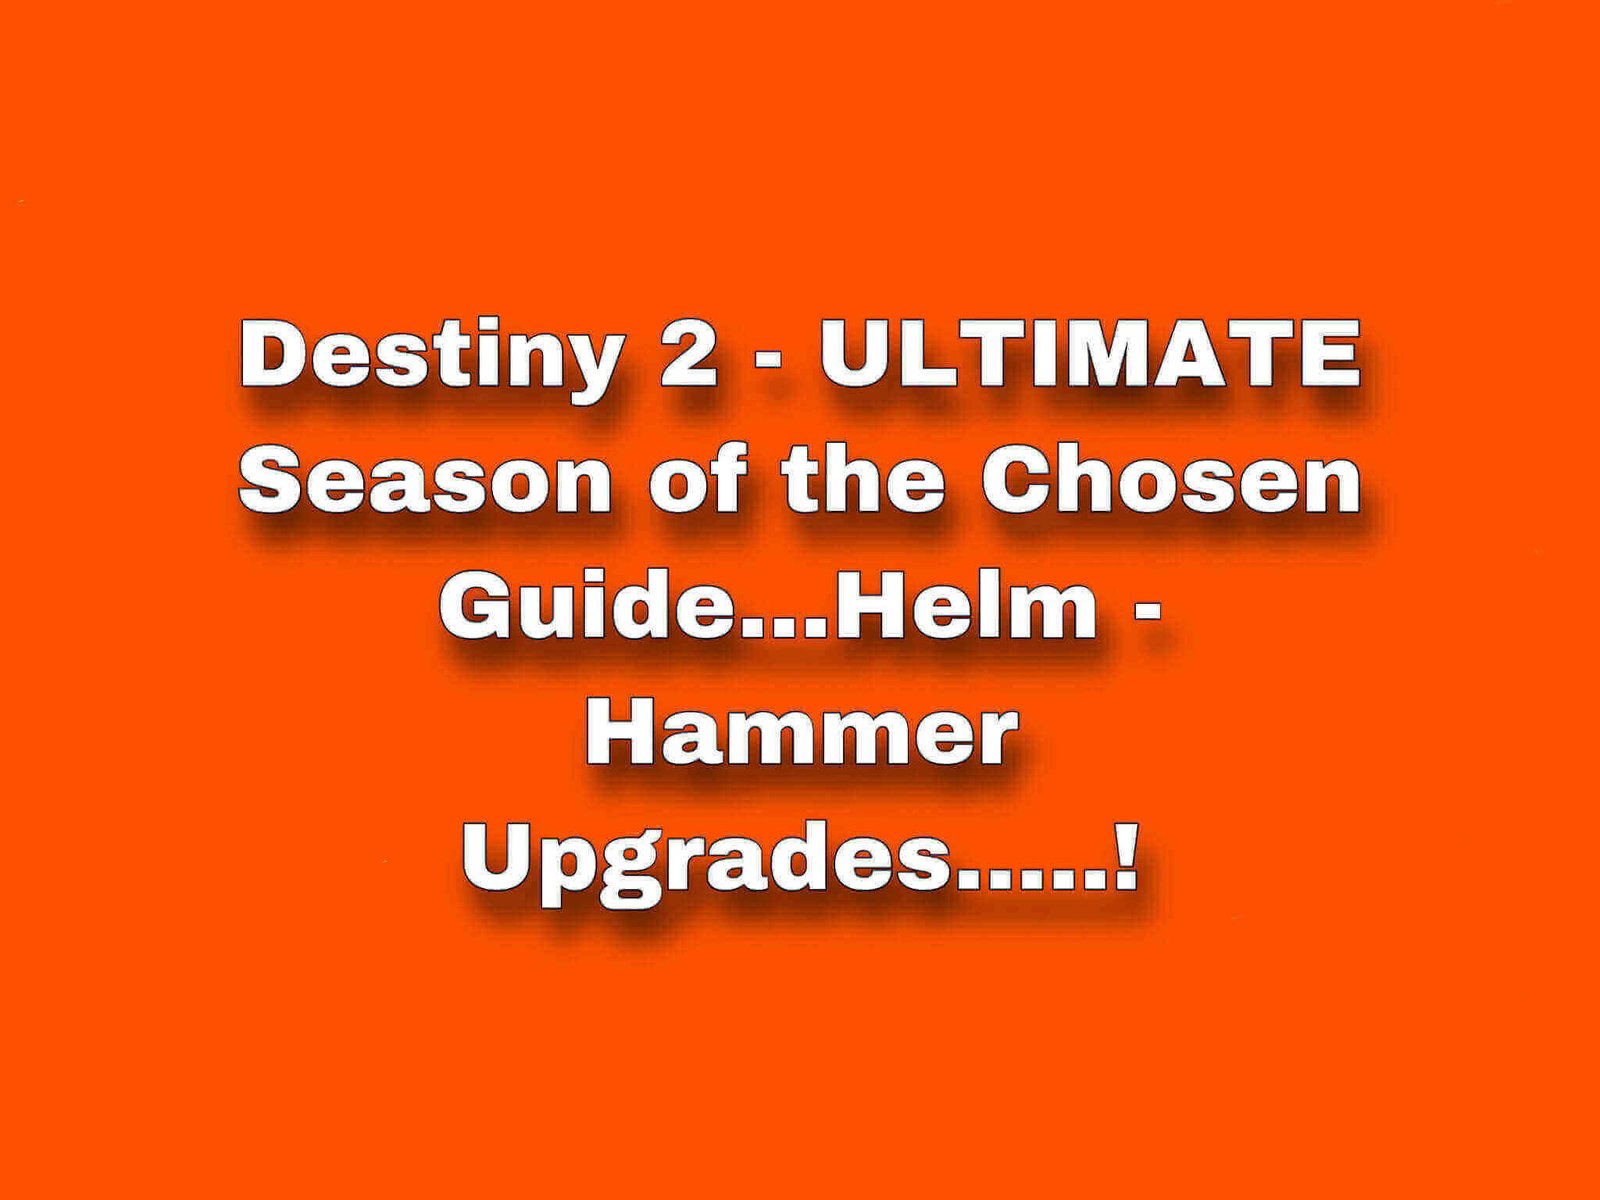 https://shyoz.com/wp-content/uploads/2021/02/Season-of-the-chosen-Hammer-Upgrades.jpeg